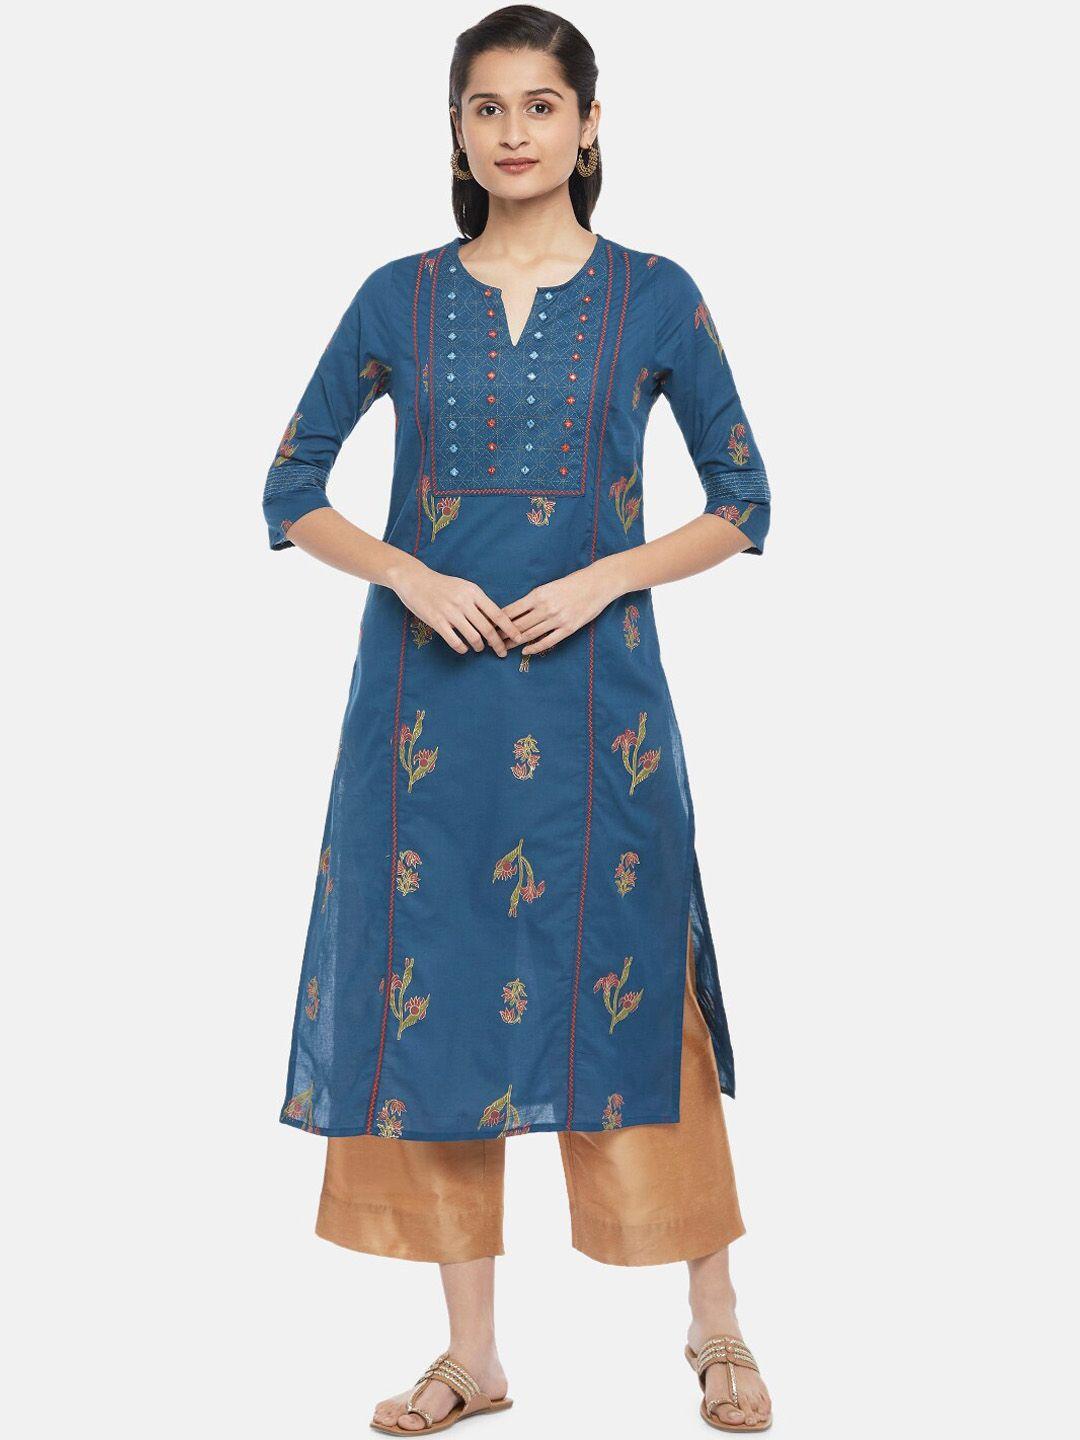 rangmanch by pantaloons women teal ethnic motifs embroidered mirror work kurta set with dupatta